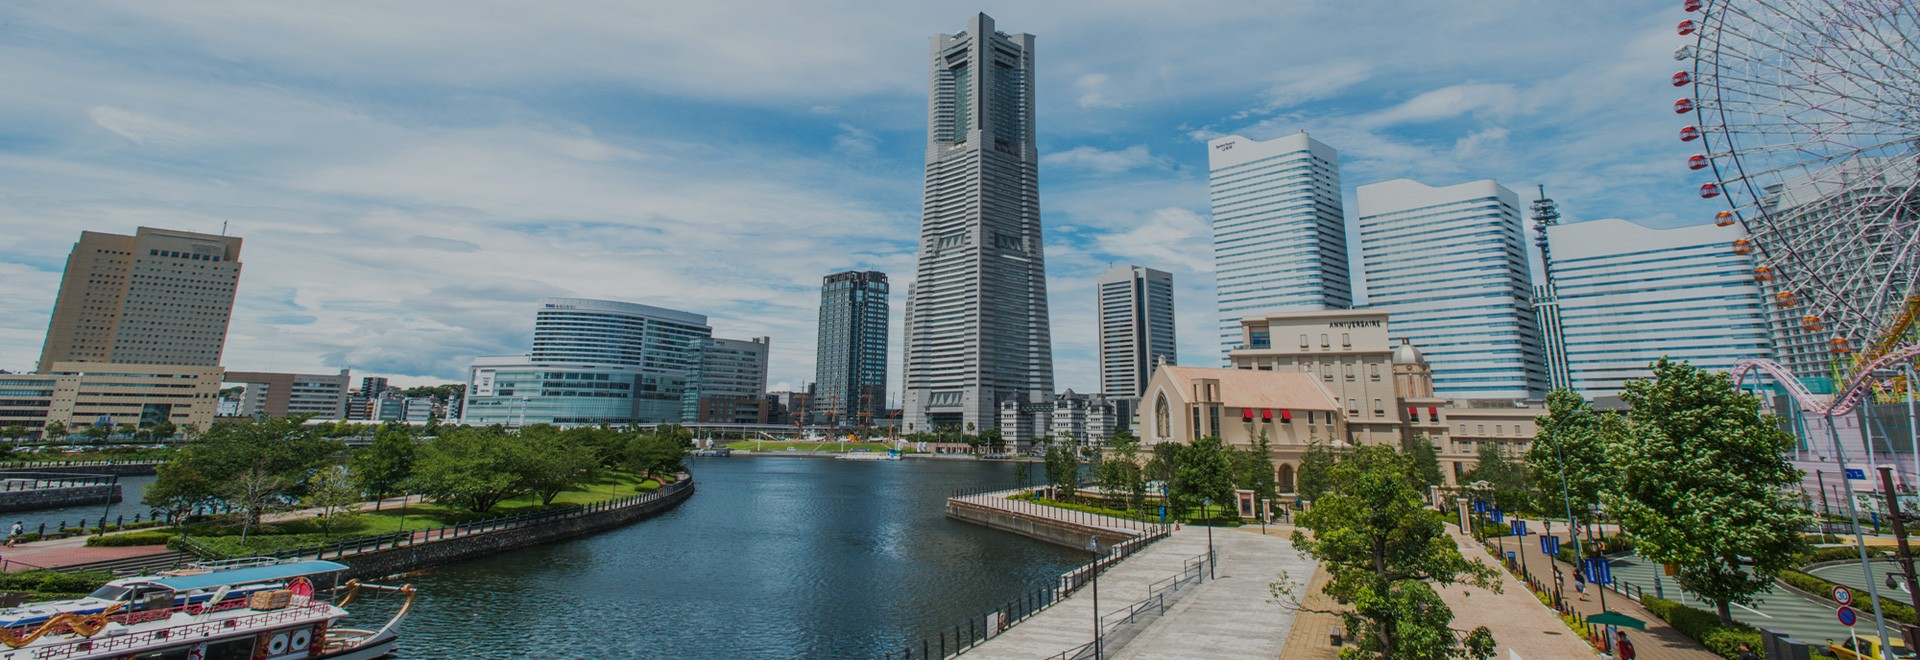 Convenient access to staple destinations like Yokohama, Kamakura, Enoshima.